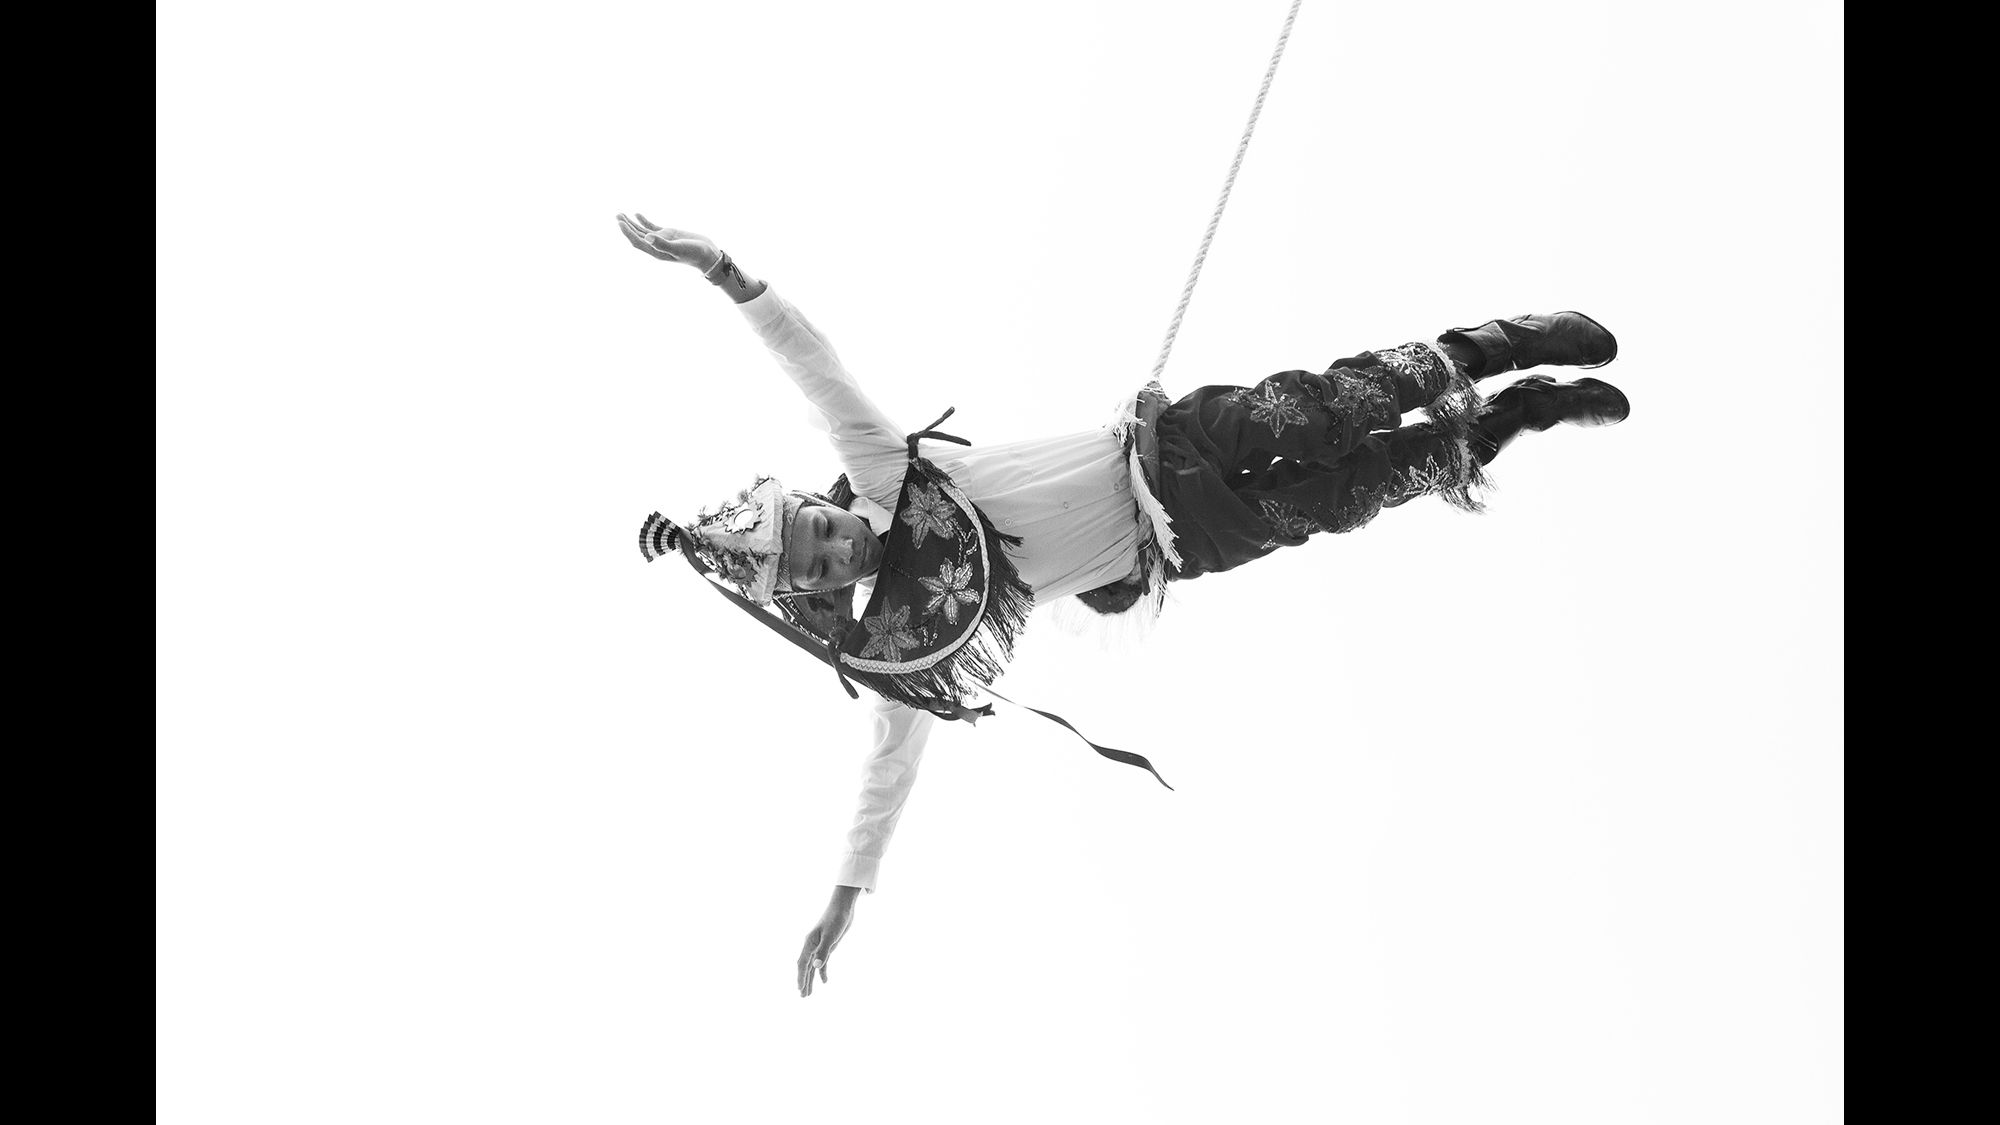 Dance of the Flyers: Death-defying pole acrobatics